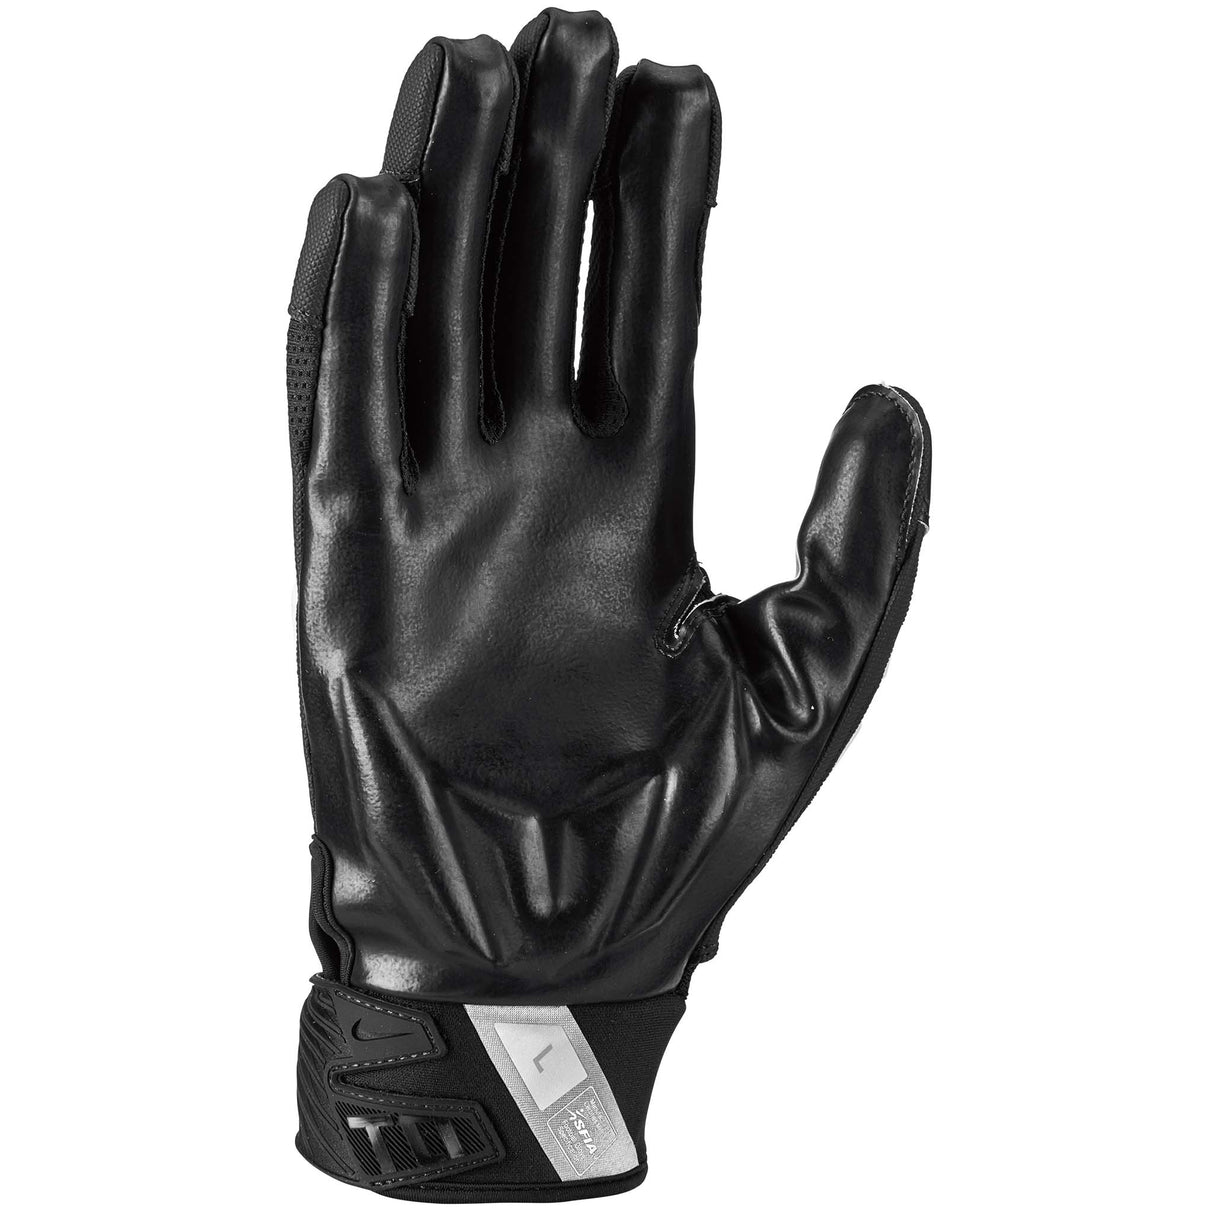 Nike D-Tack 6.0 gants de football américain black metallic chrome paume